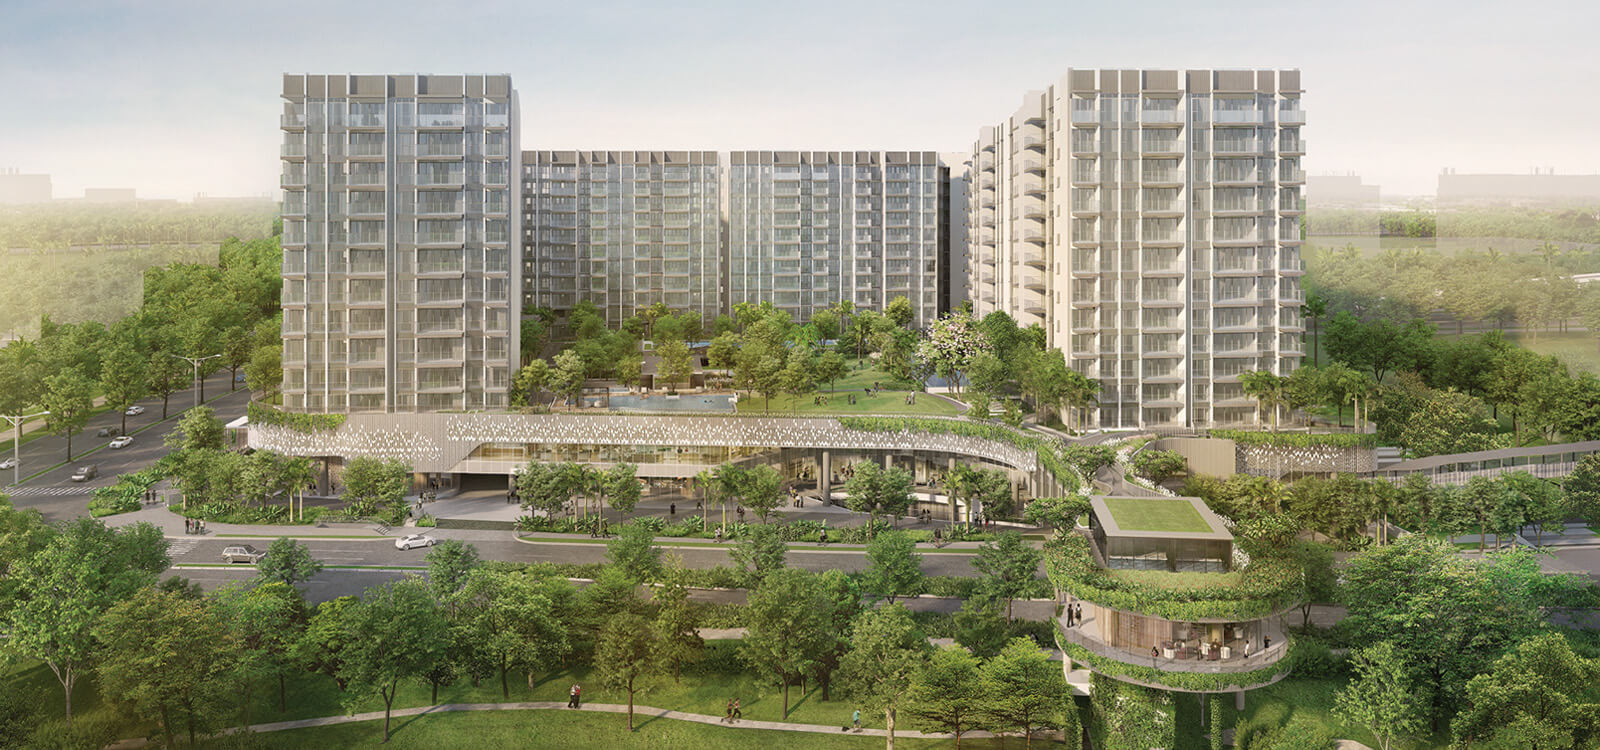 new condo singapore the woodleigh residences hero